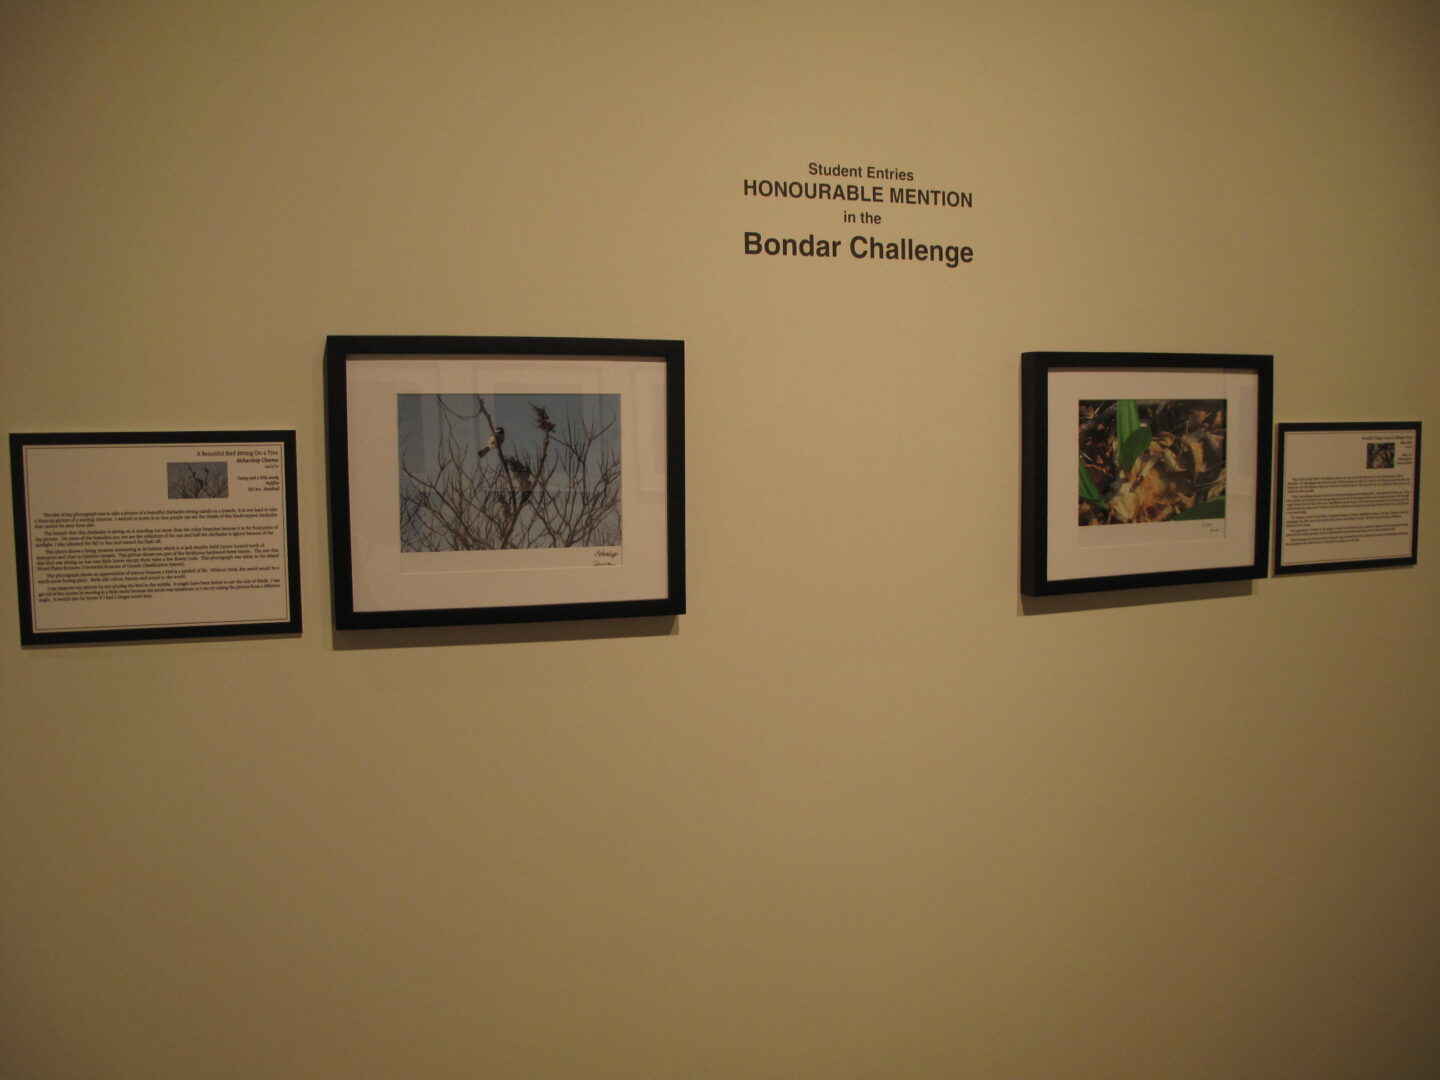 Image of Bondar Challenge winning photos in a gallery